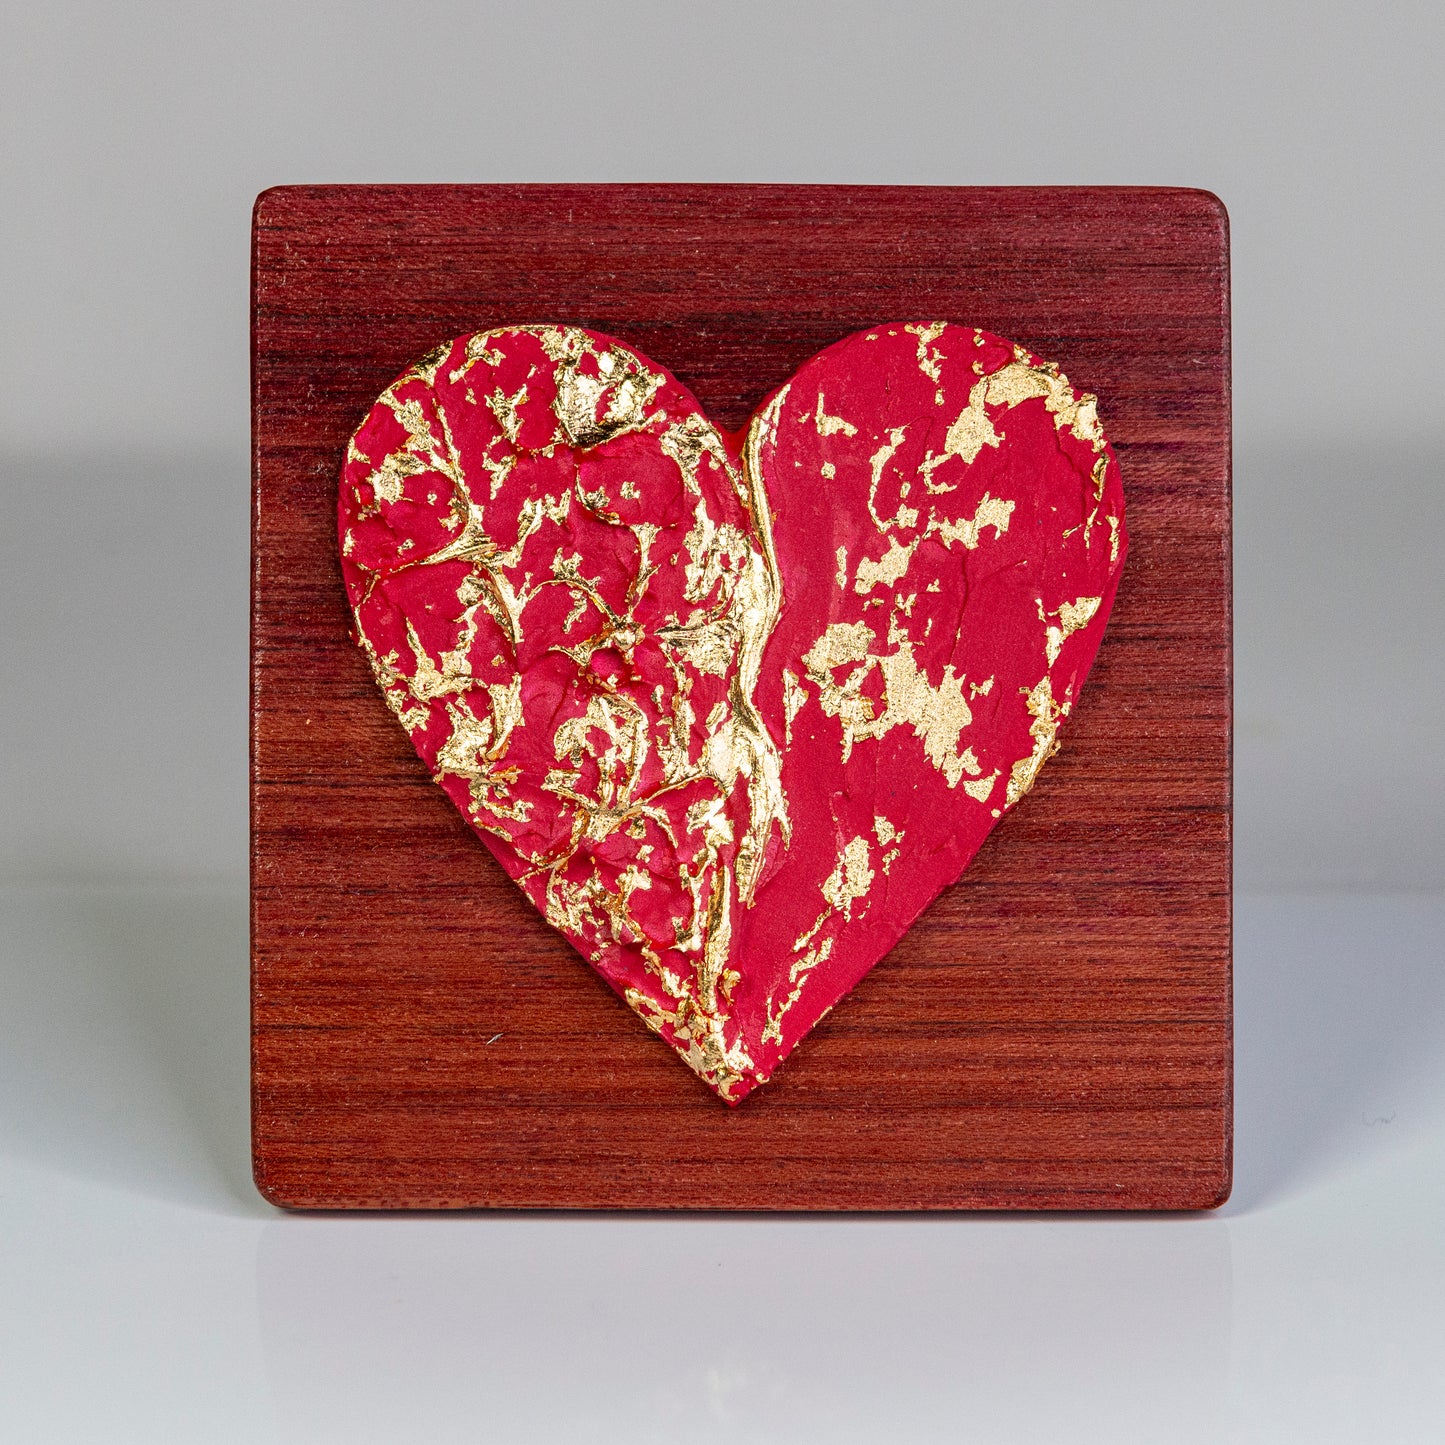 Metal art heart on wood